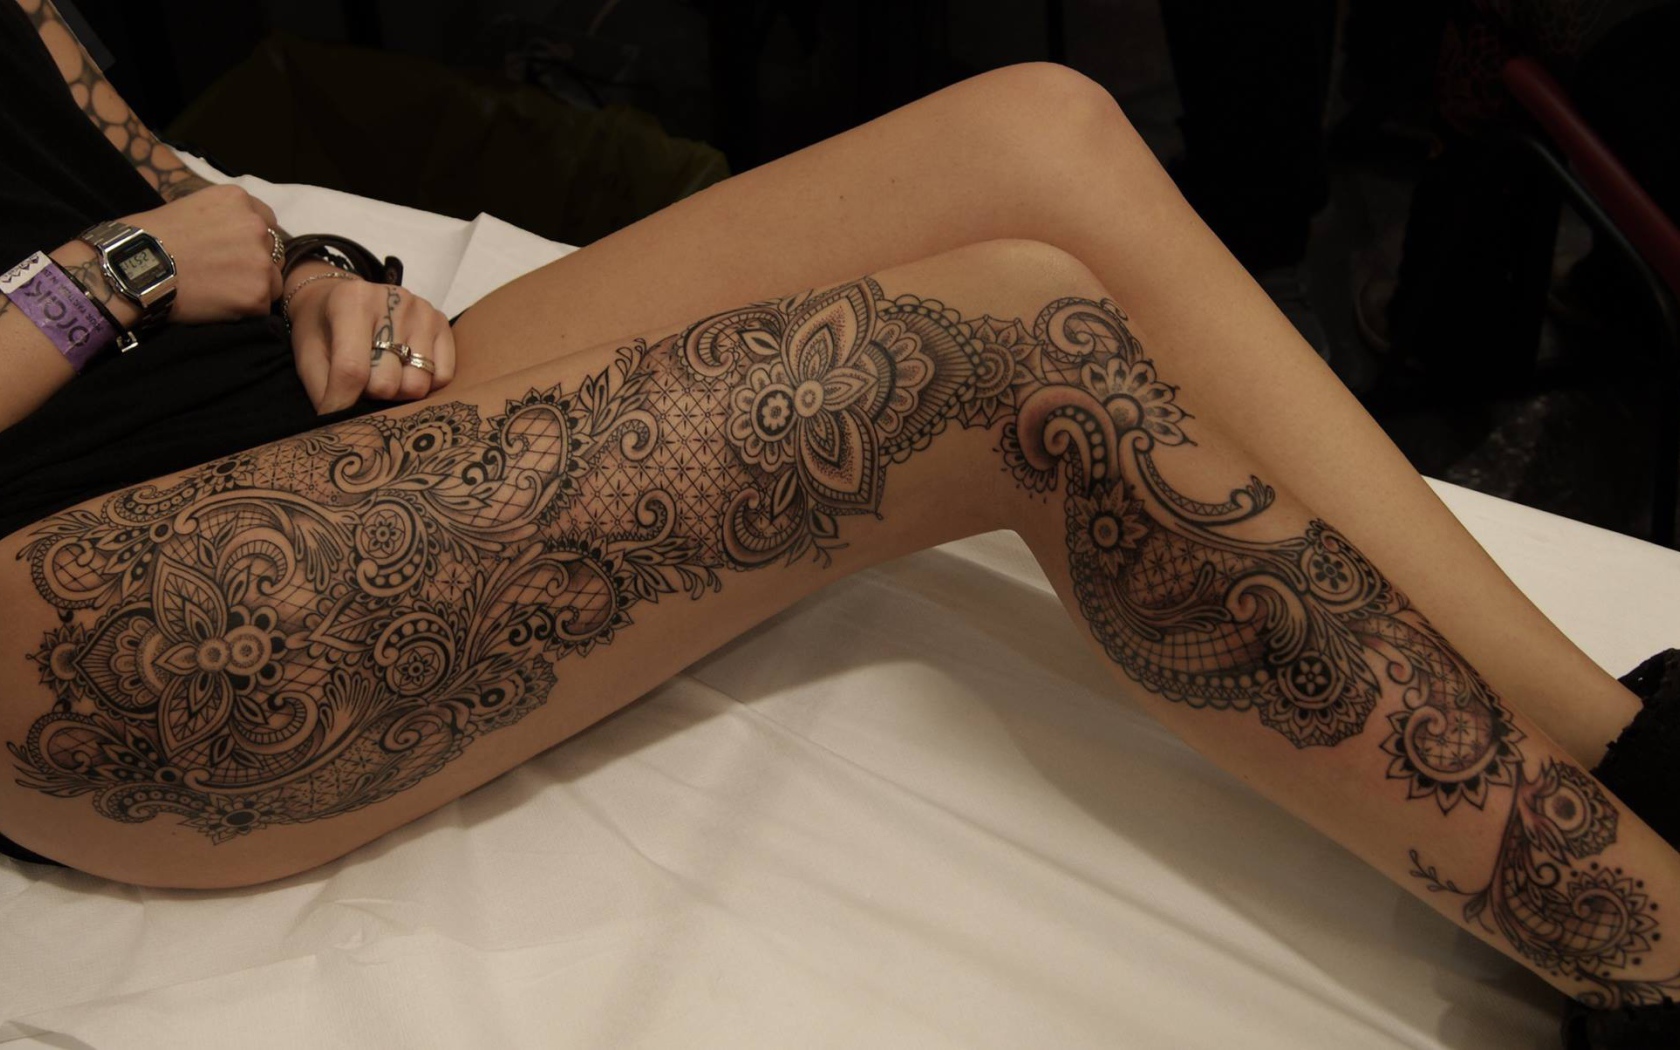 Beautiful tattoo on the leg of the girl